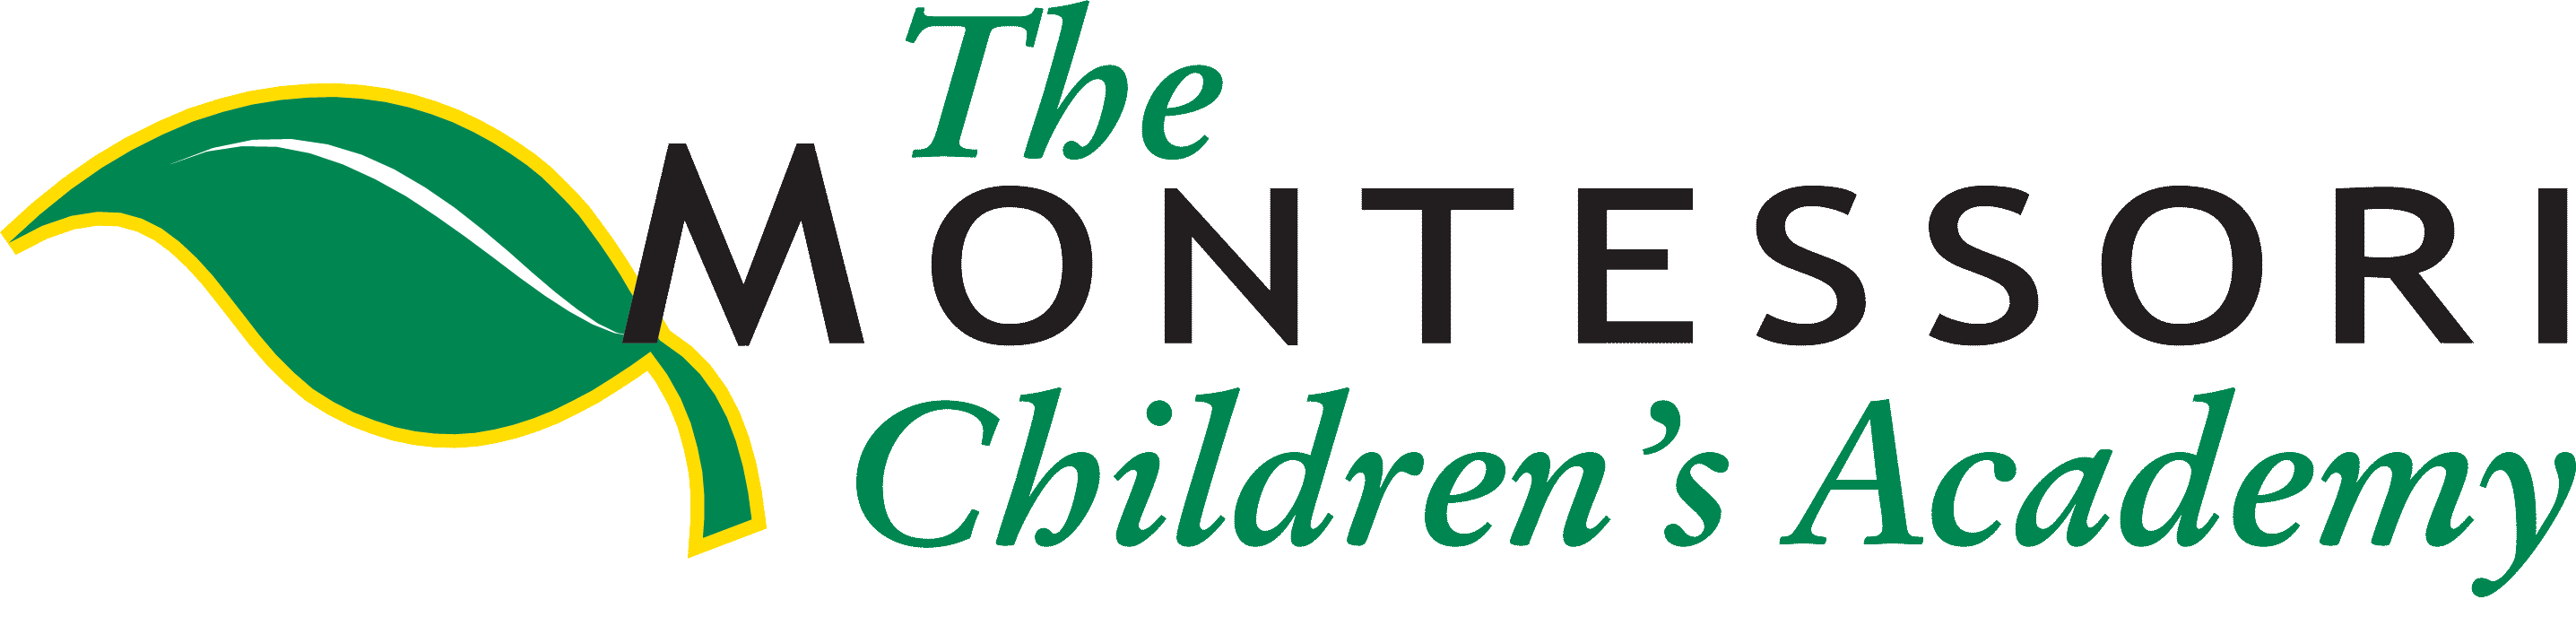 The Montessori Children's Academy - (Chatham)